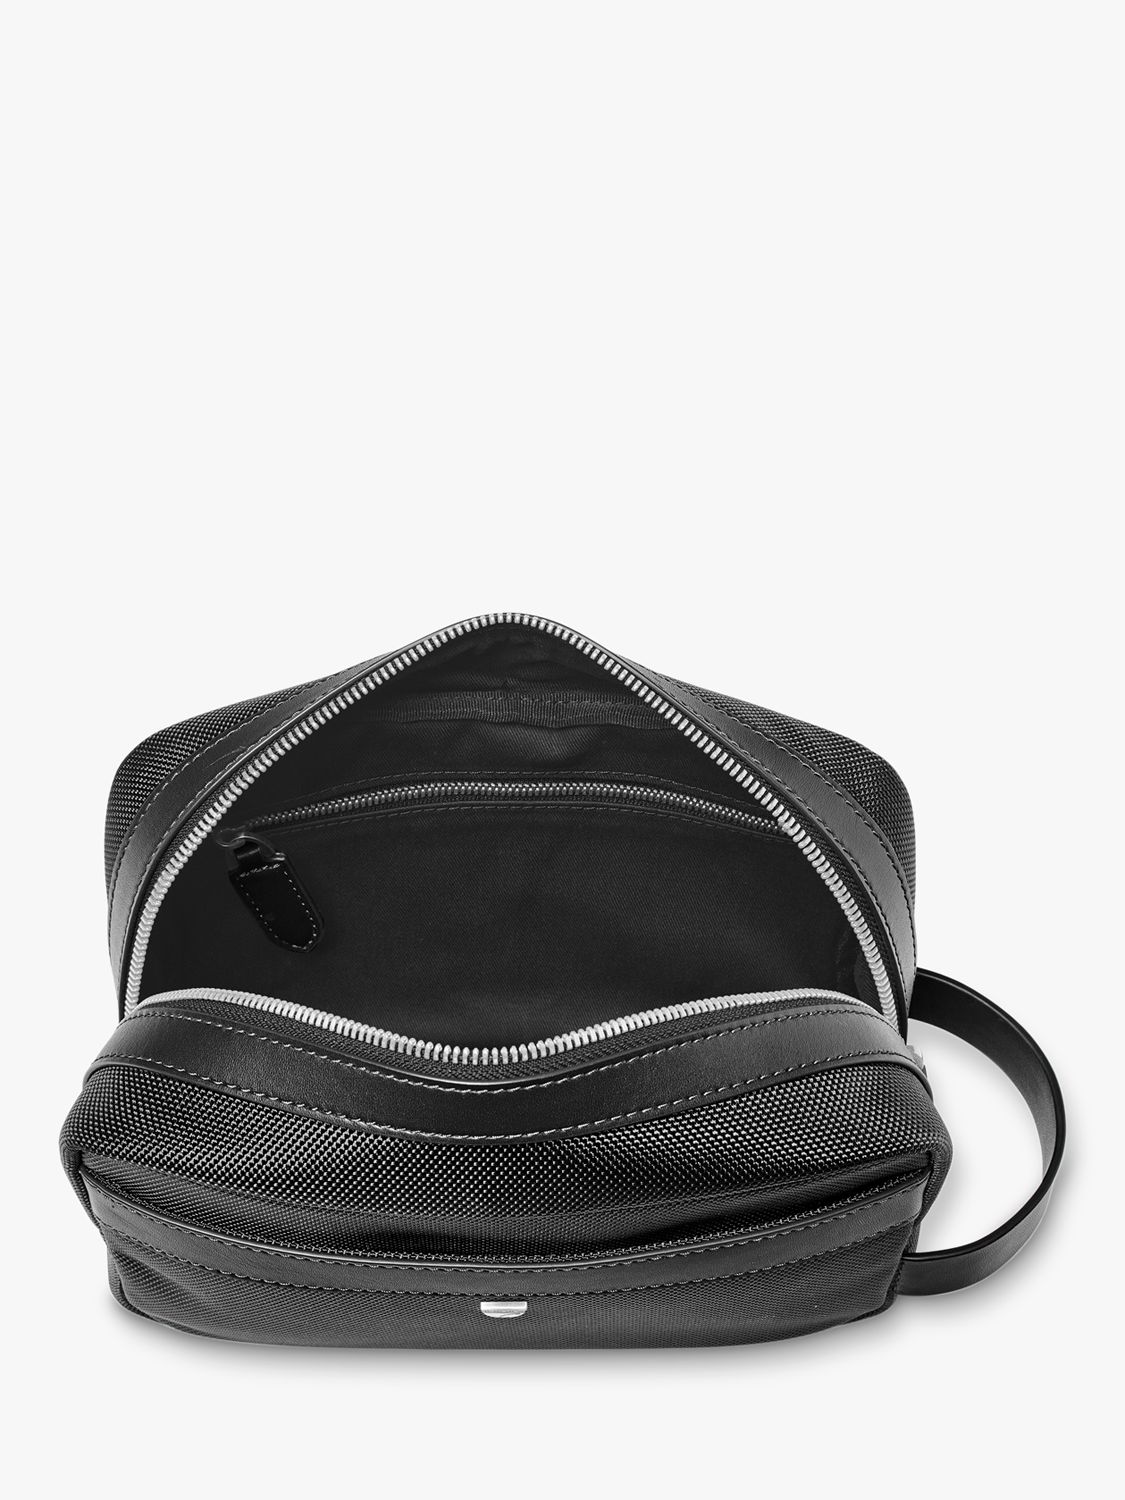 Aspinal of London Men's Nylon Wash Bag, Black 3